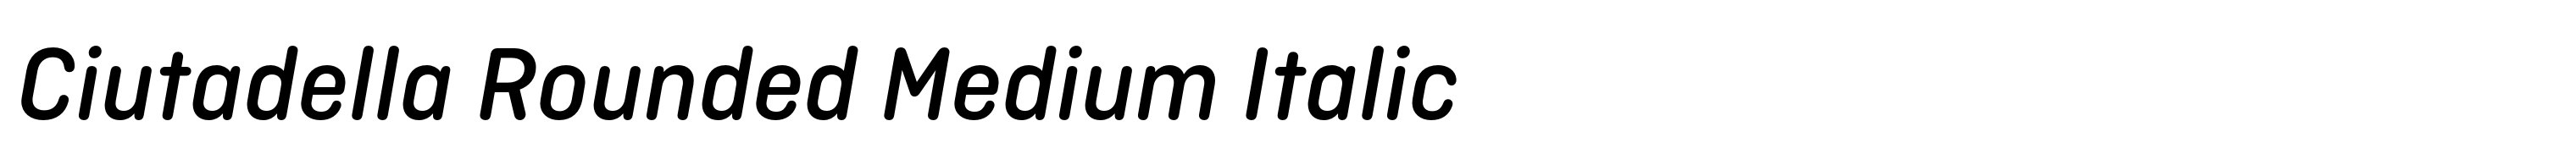 Ciutadella Rounded Medium Italic